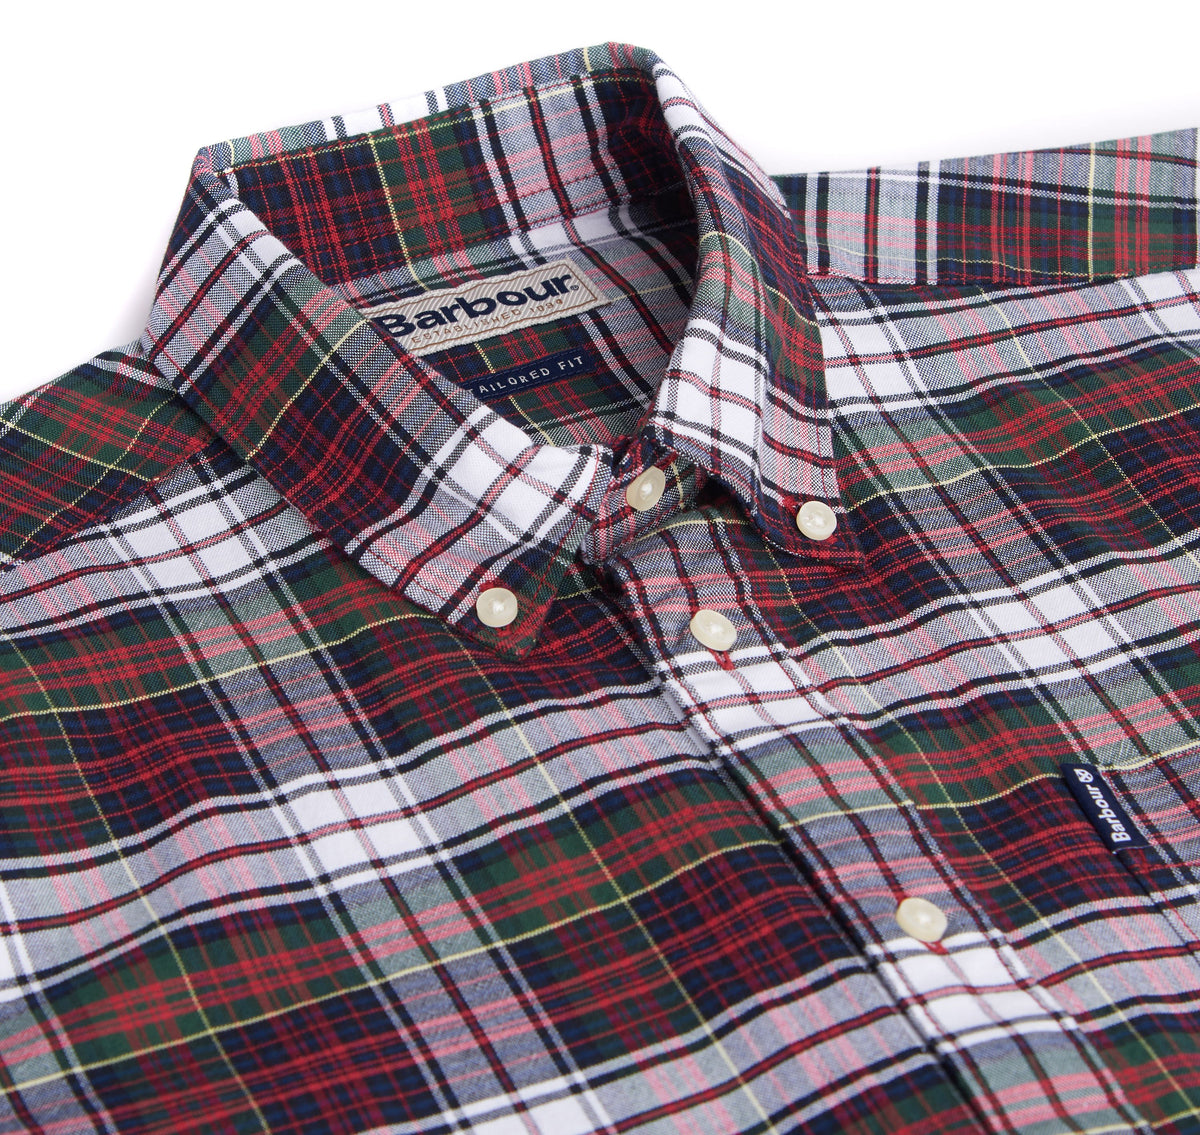 Barbour Men's 'Highland Check 11' Shirt - Long Sleeved, 06, Msh4549, Red